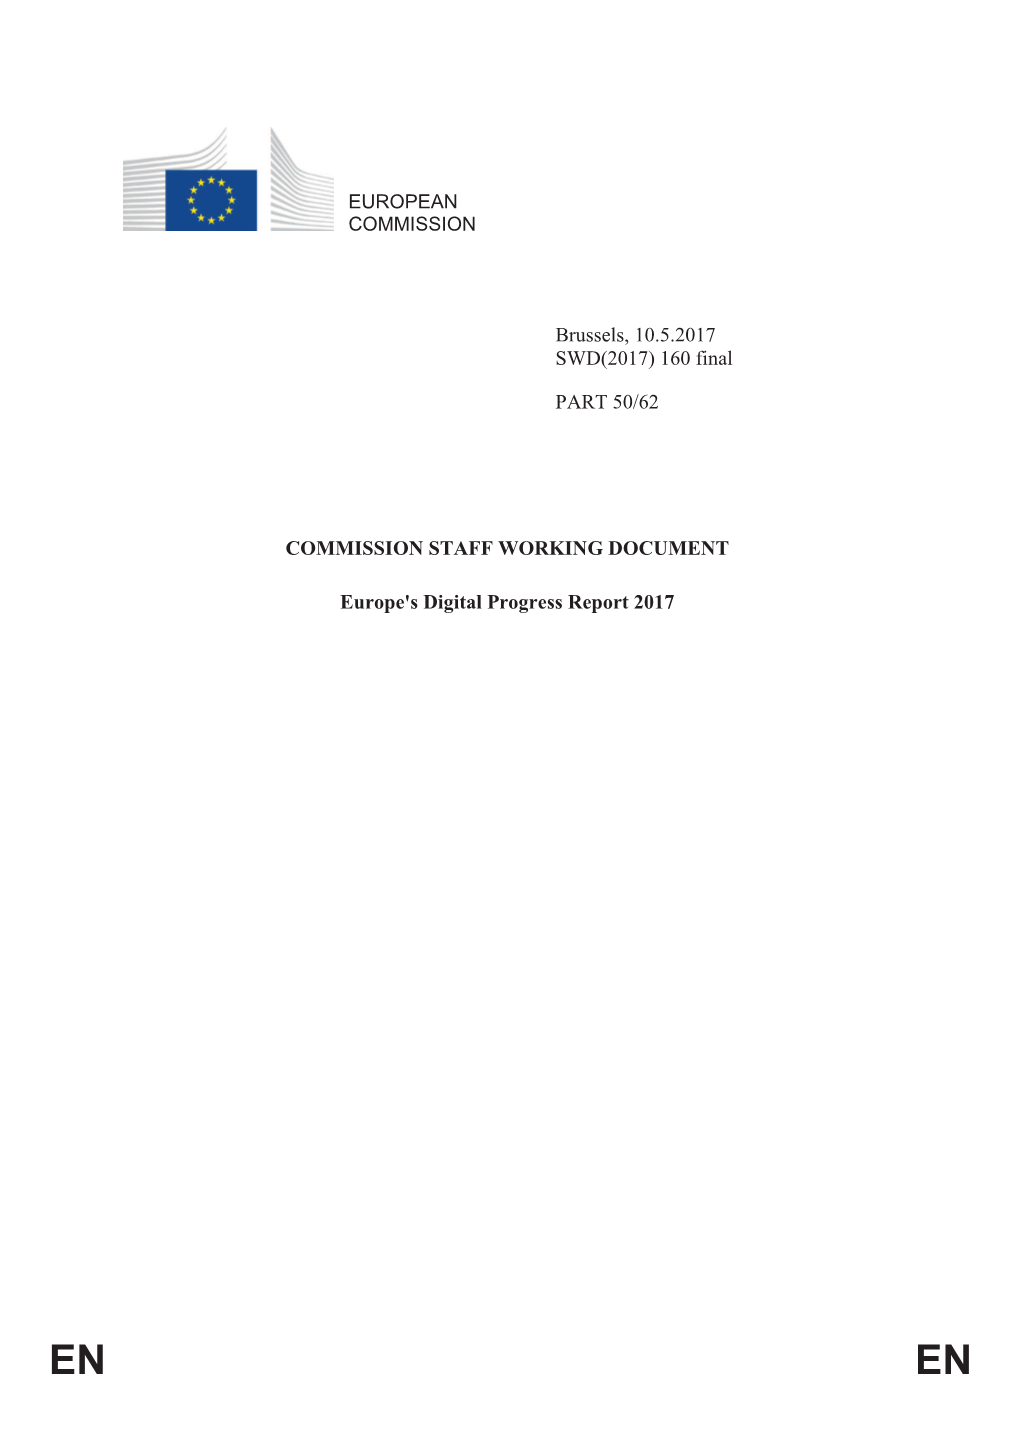 EUROPEAN COMMISSION Brussels, 10.5.2017 SWD(2017) 160 Final